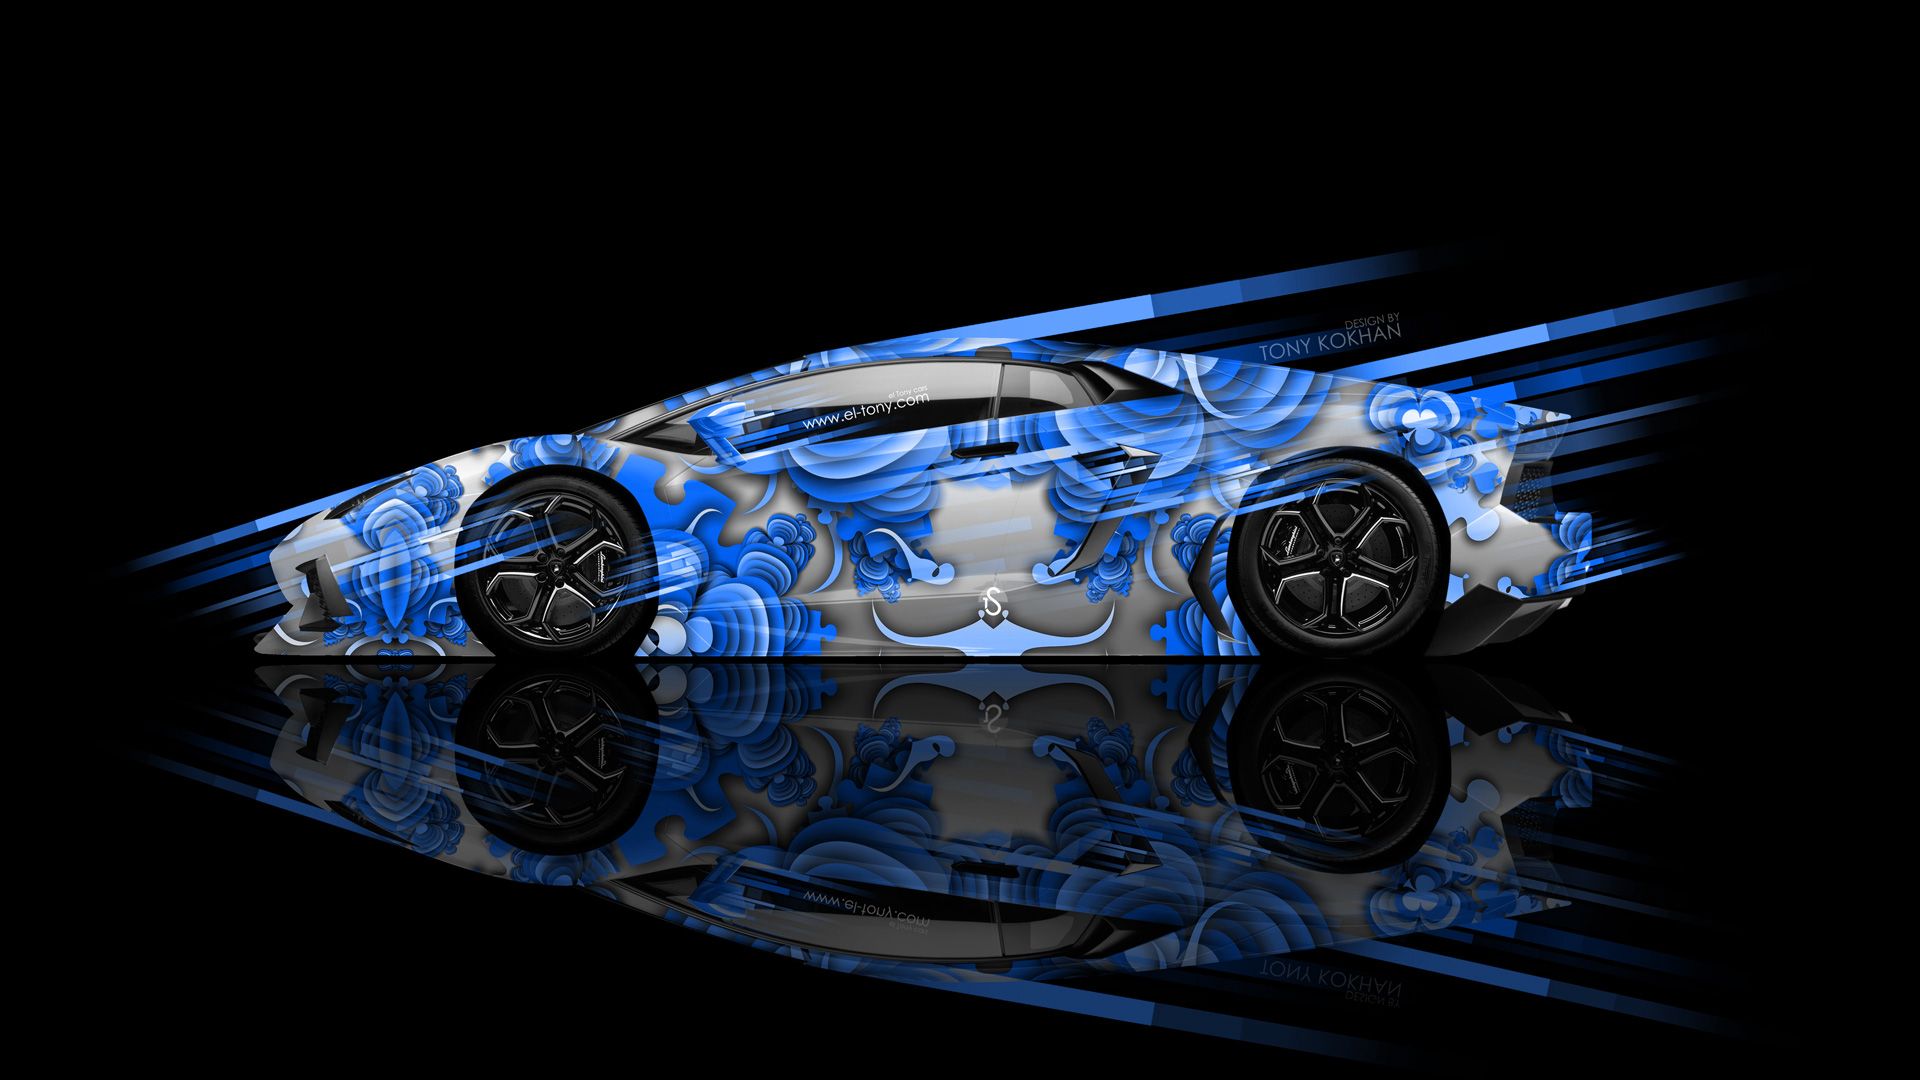 Lamborghini Aventador Side Super Speed Aerography Car 2014 el Tony